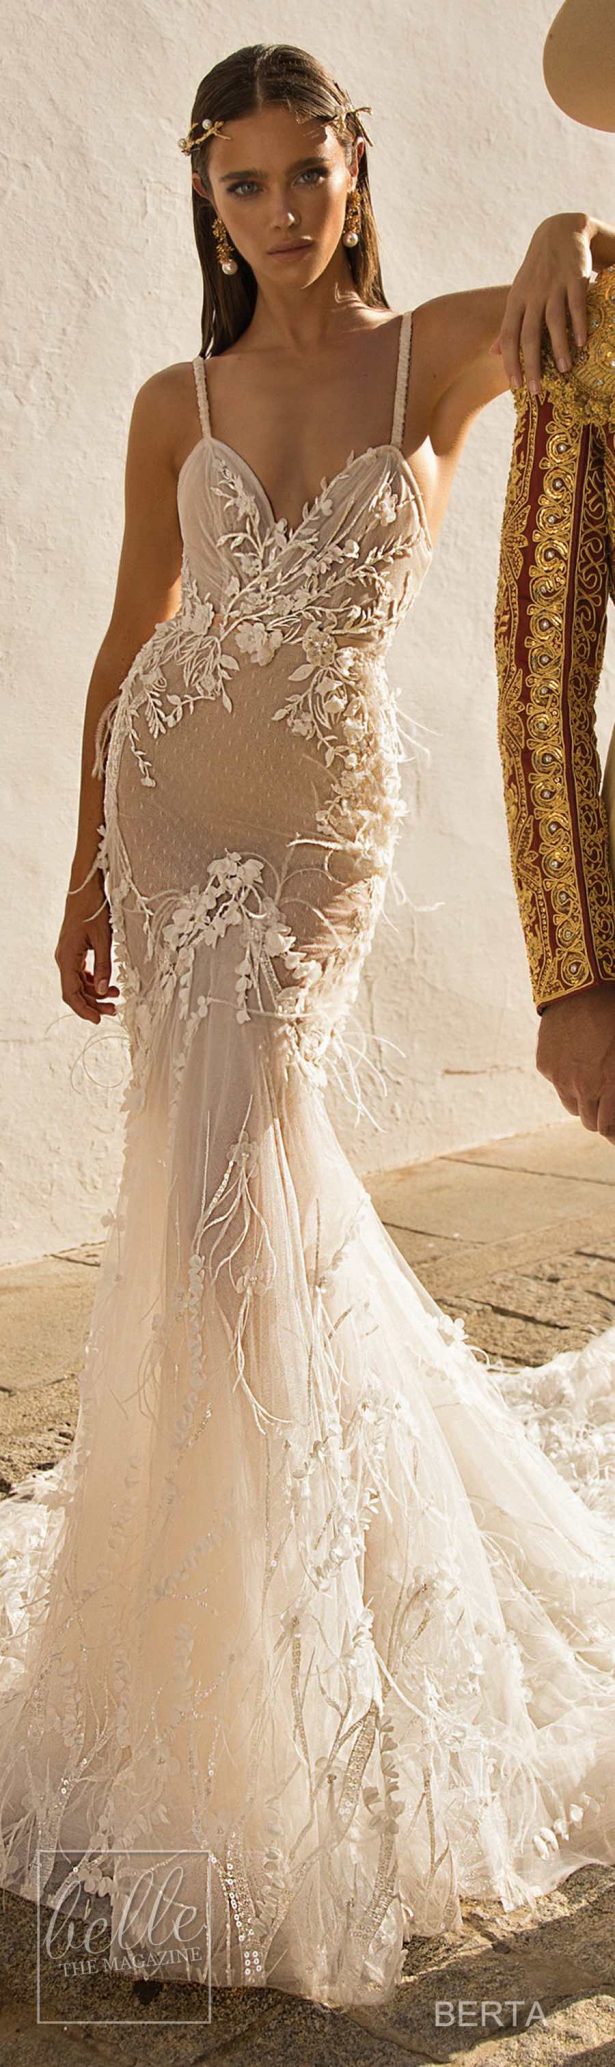 Berta Fall 2018 Seville Wedding Dress Collection Belle The Magazine 0694